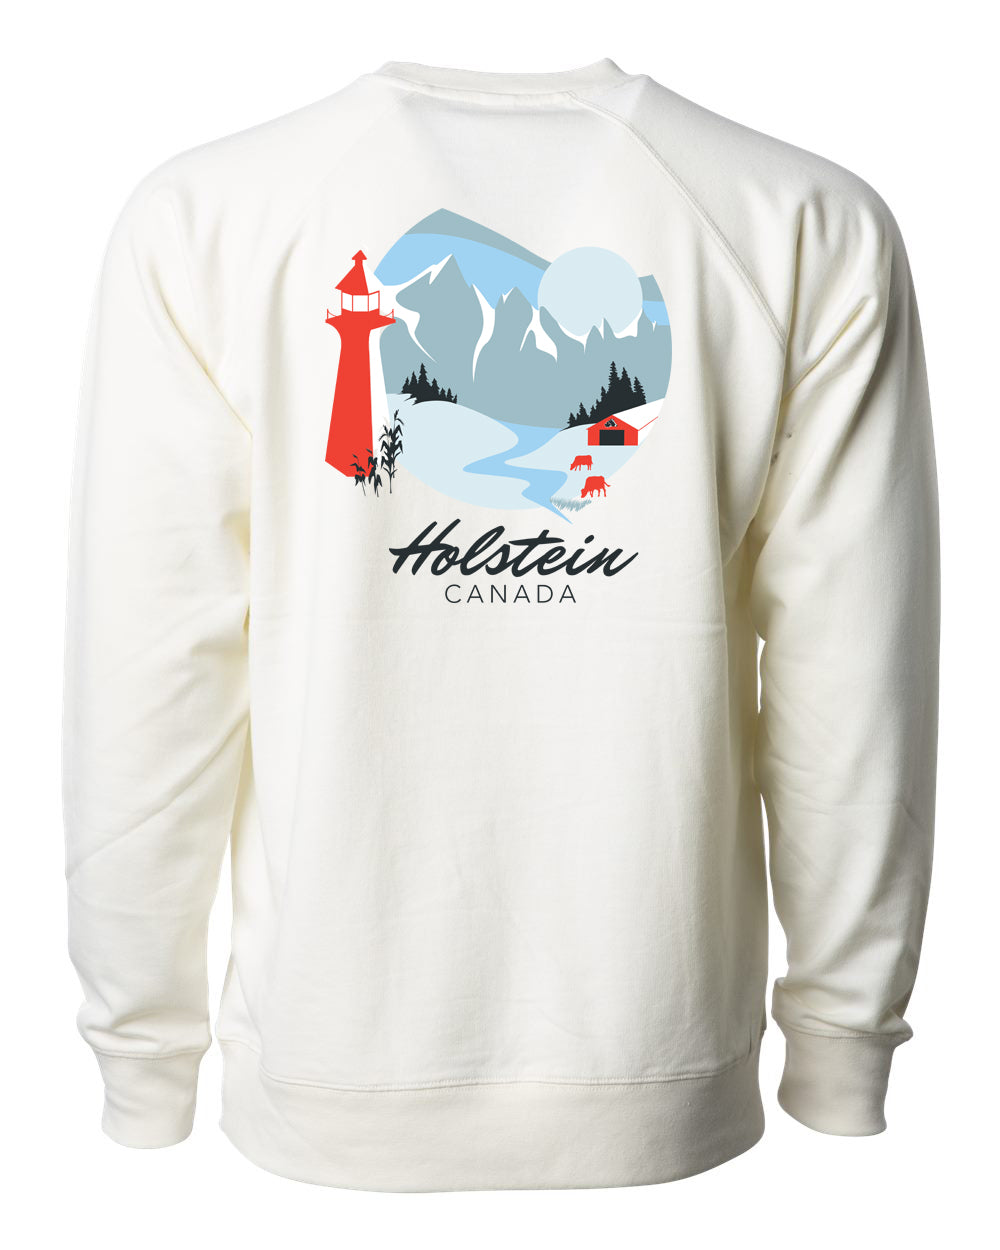 Partout au Canada - Sweat-shirt Holstein Canada